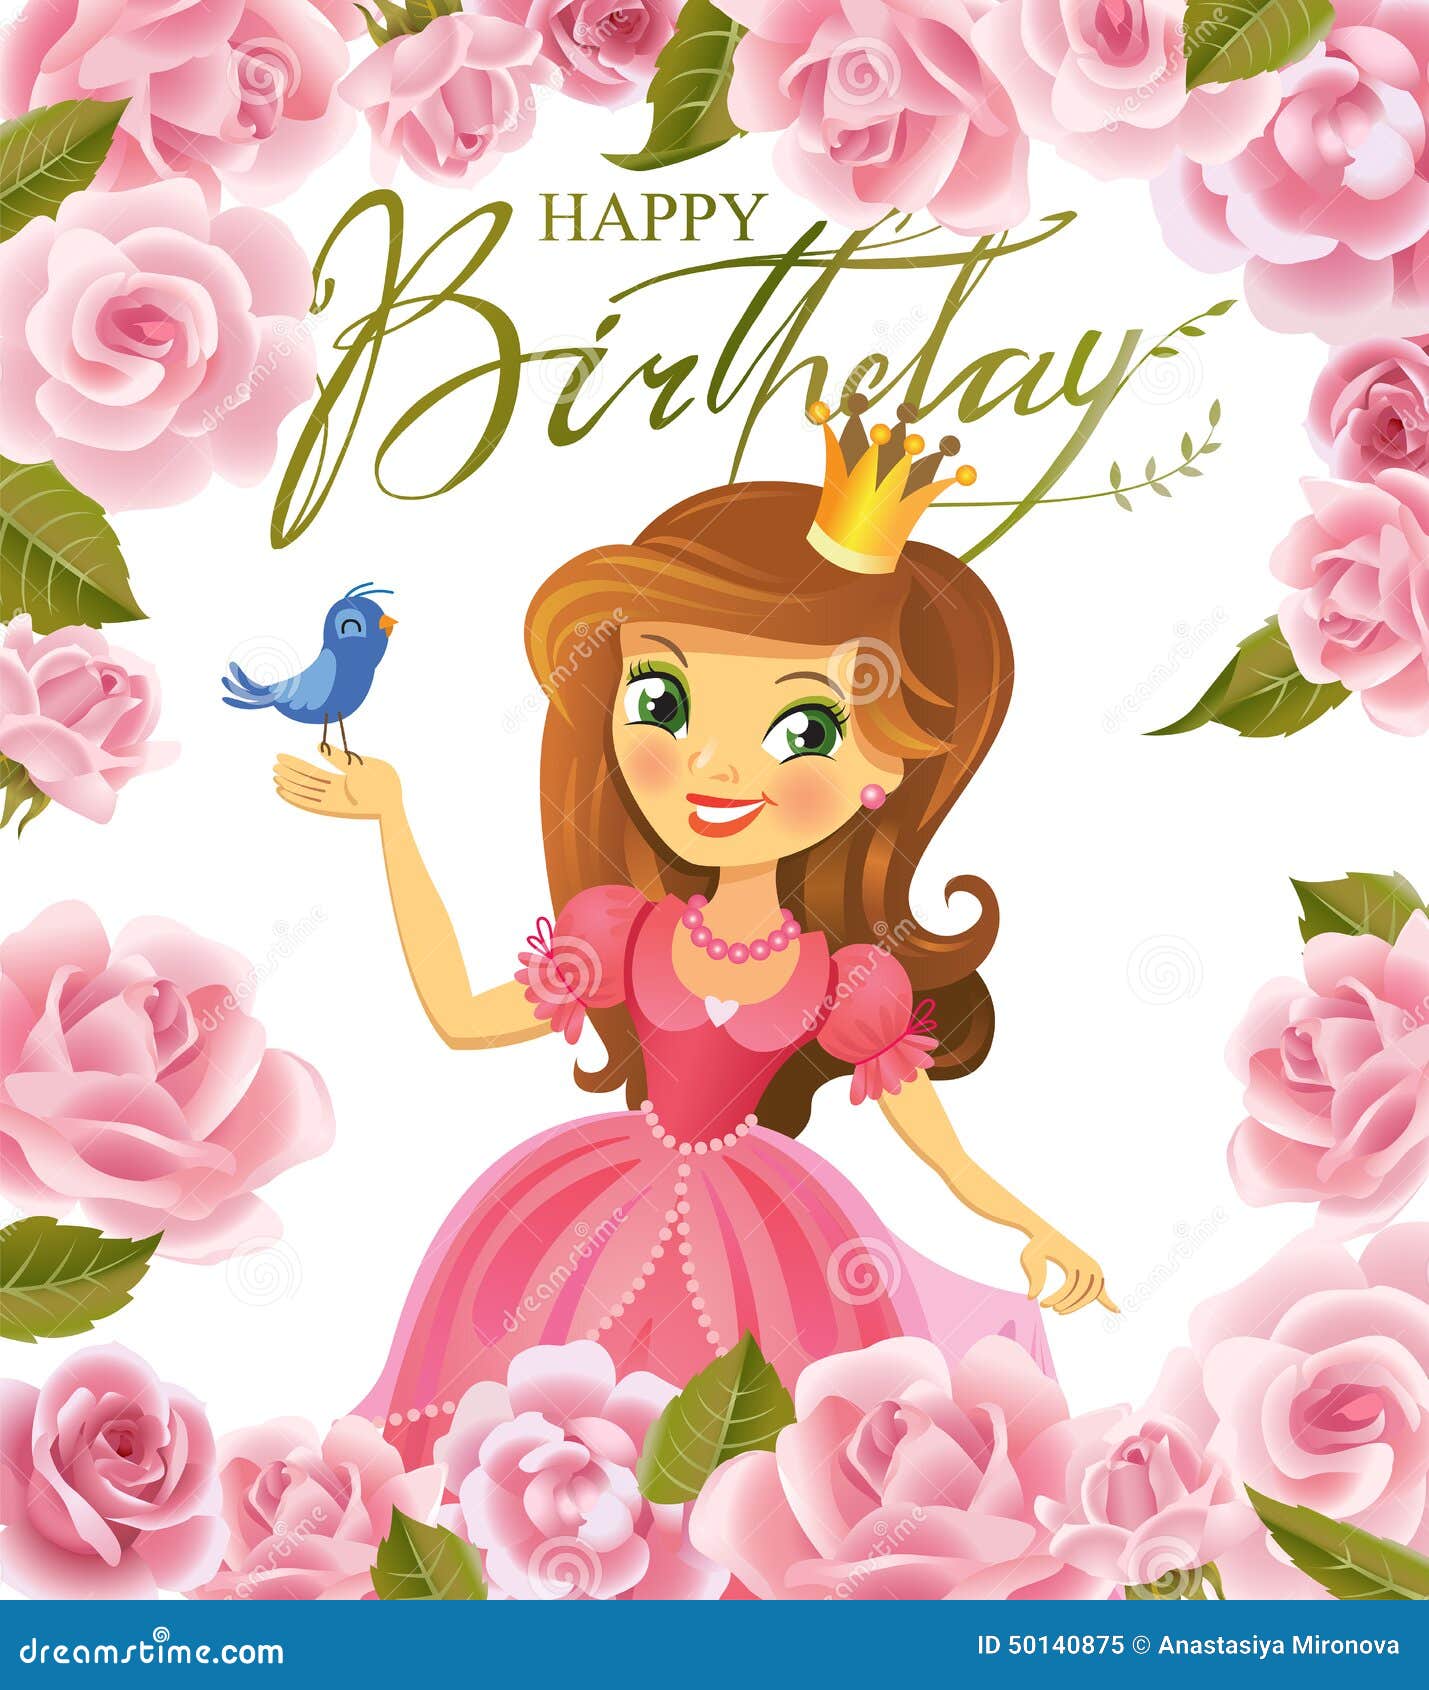 Happy Birthday, Princess, Greeting Card Stock Vector 